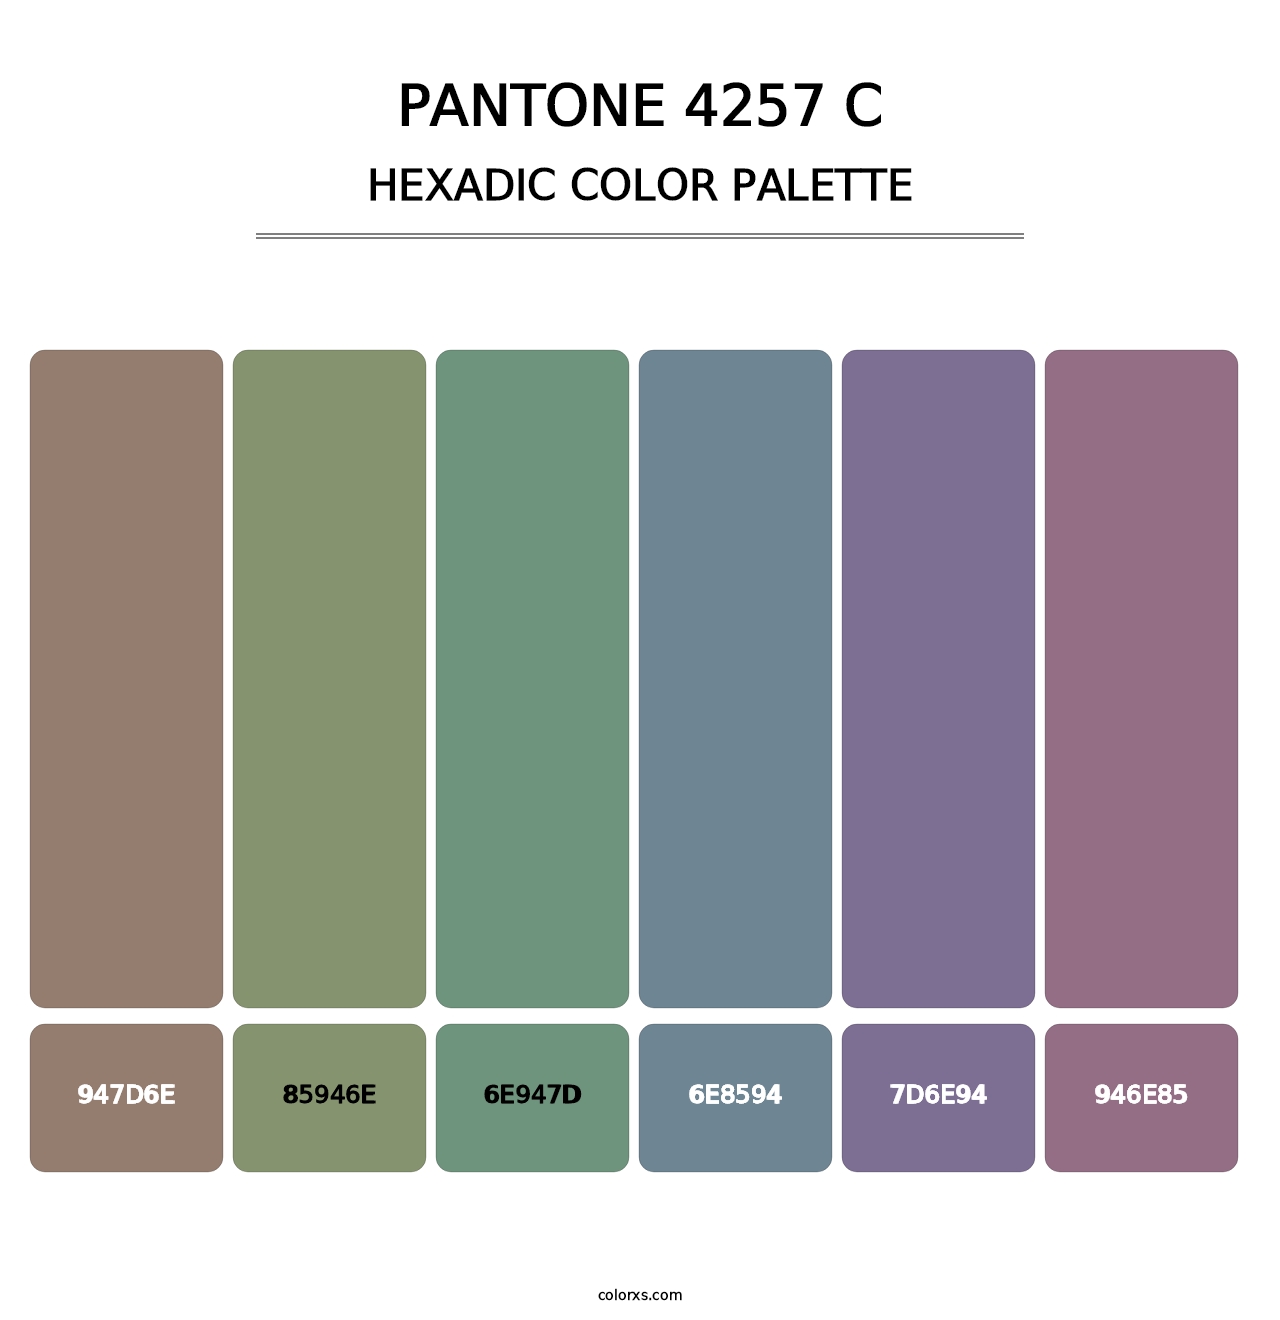 PANTONE 4257 C - Hexadic Color Palette